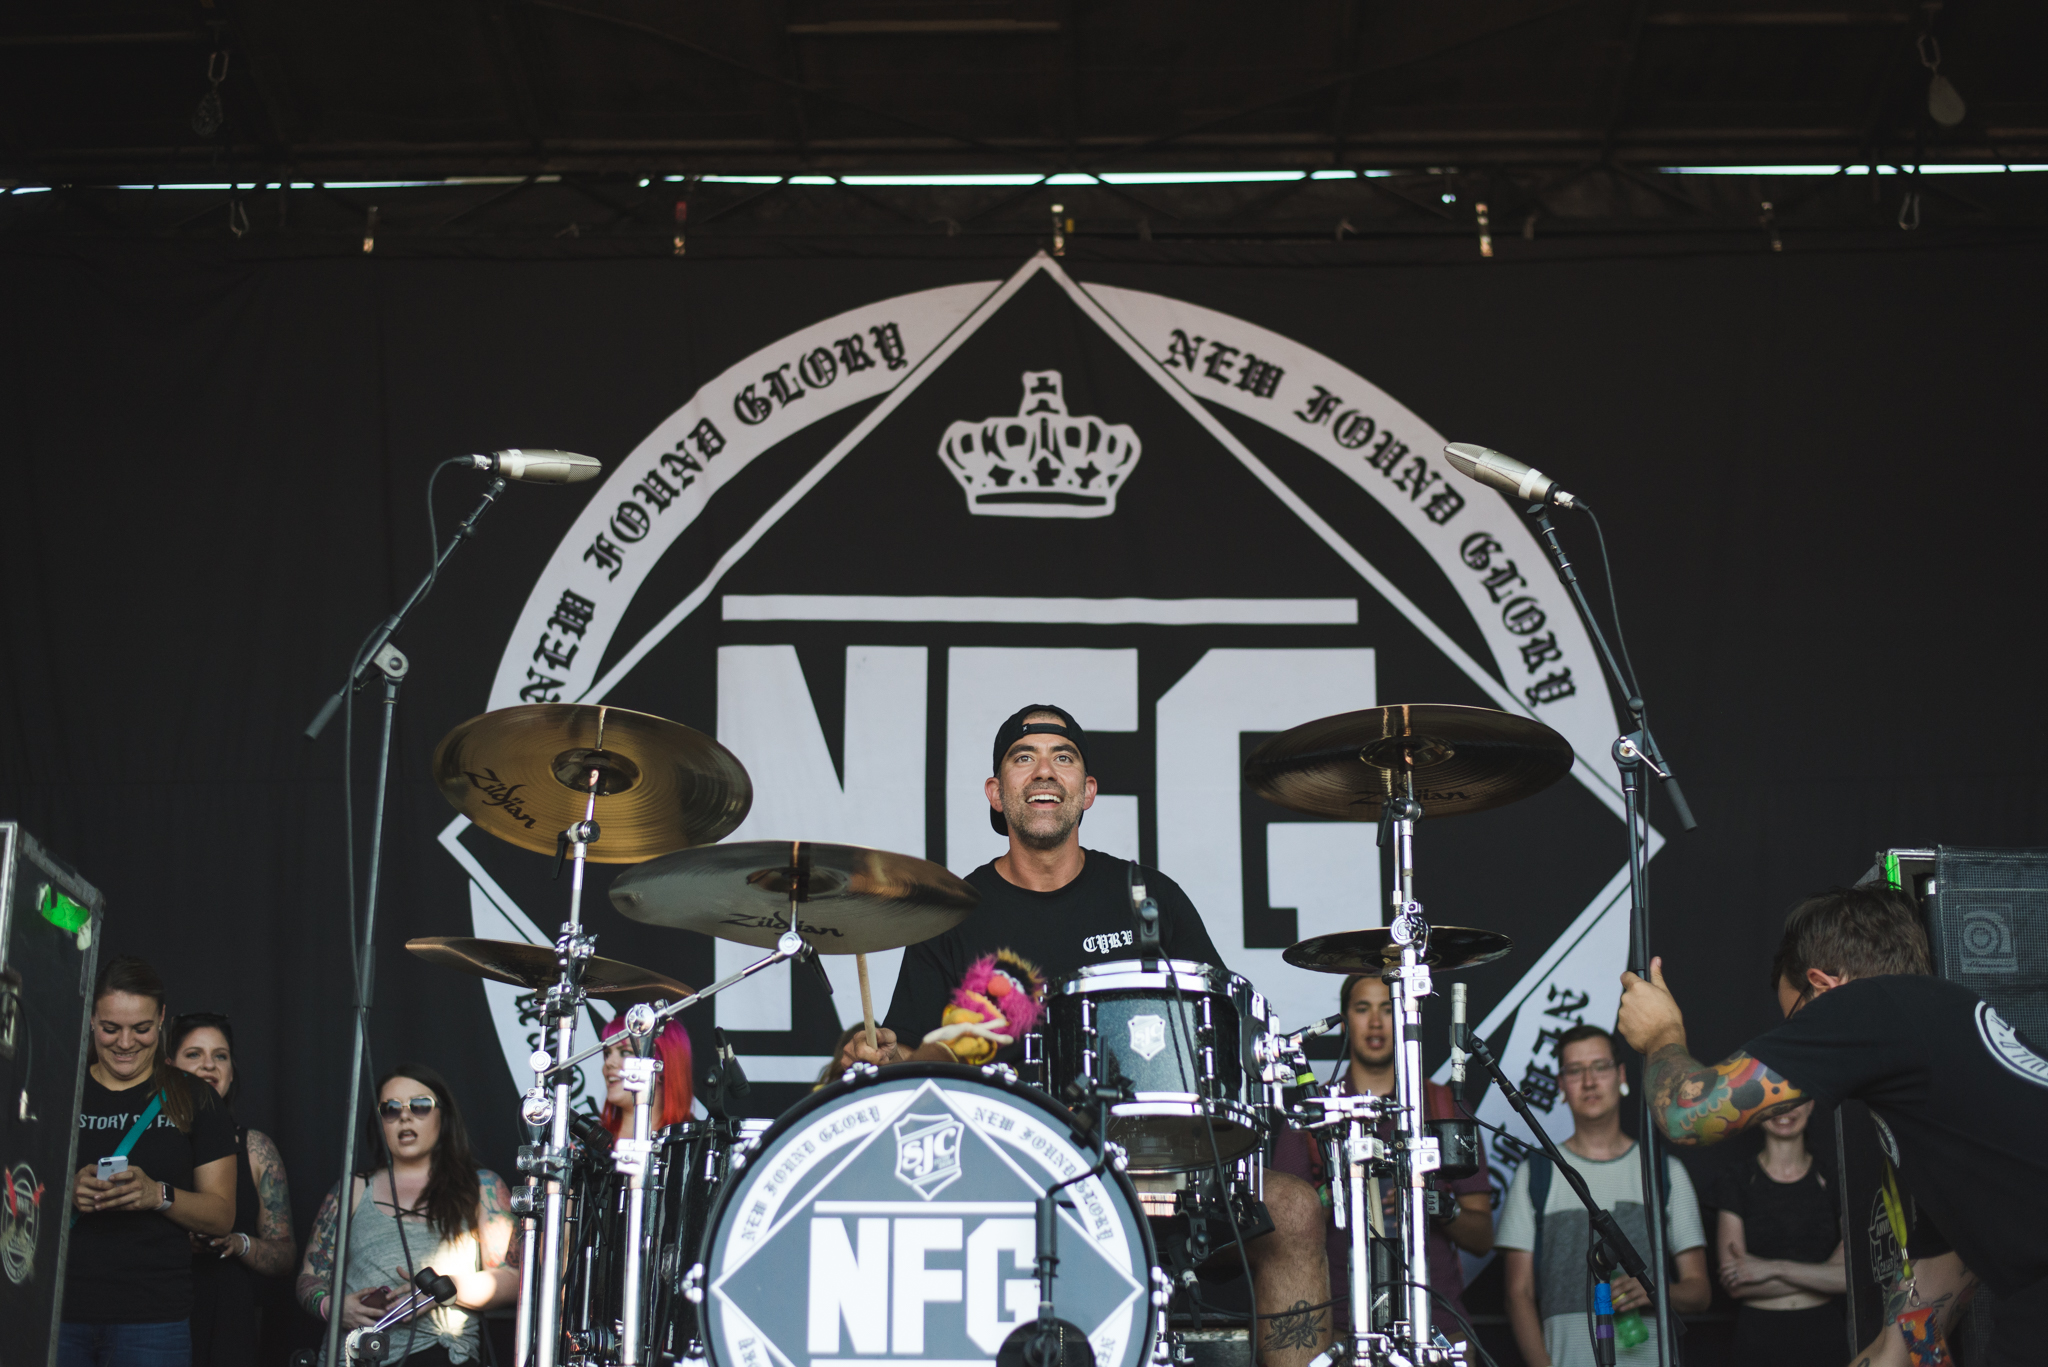 New Found Glory - Photo by Lindsey Blane